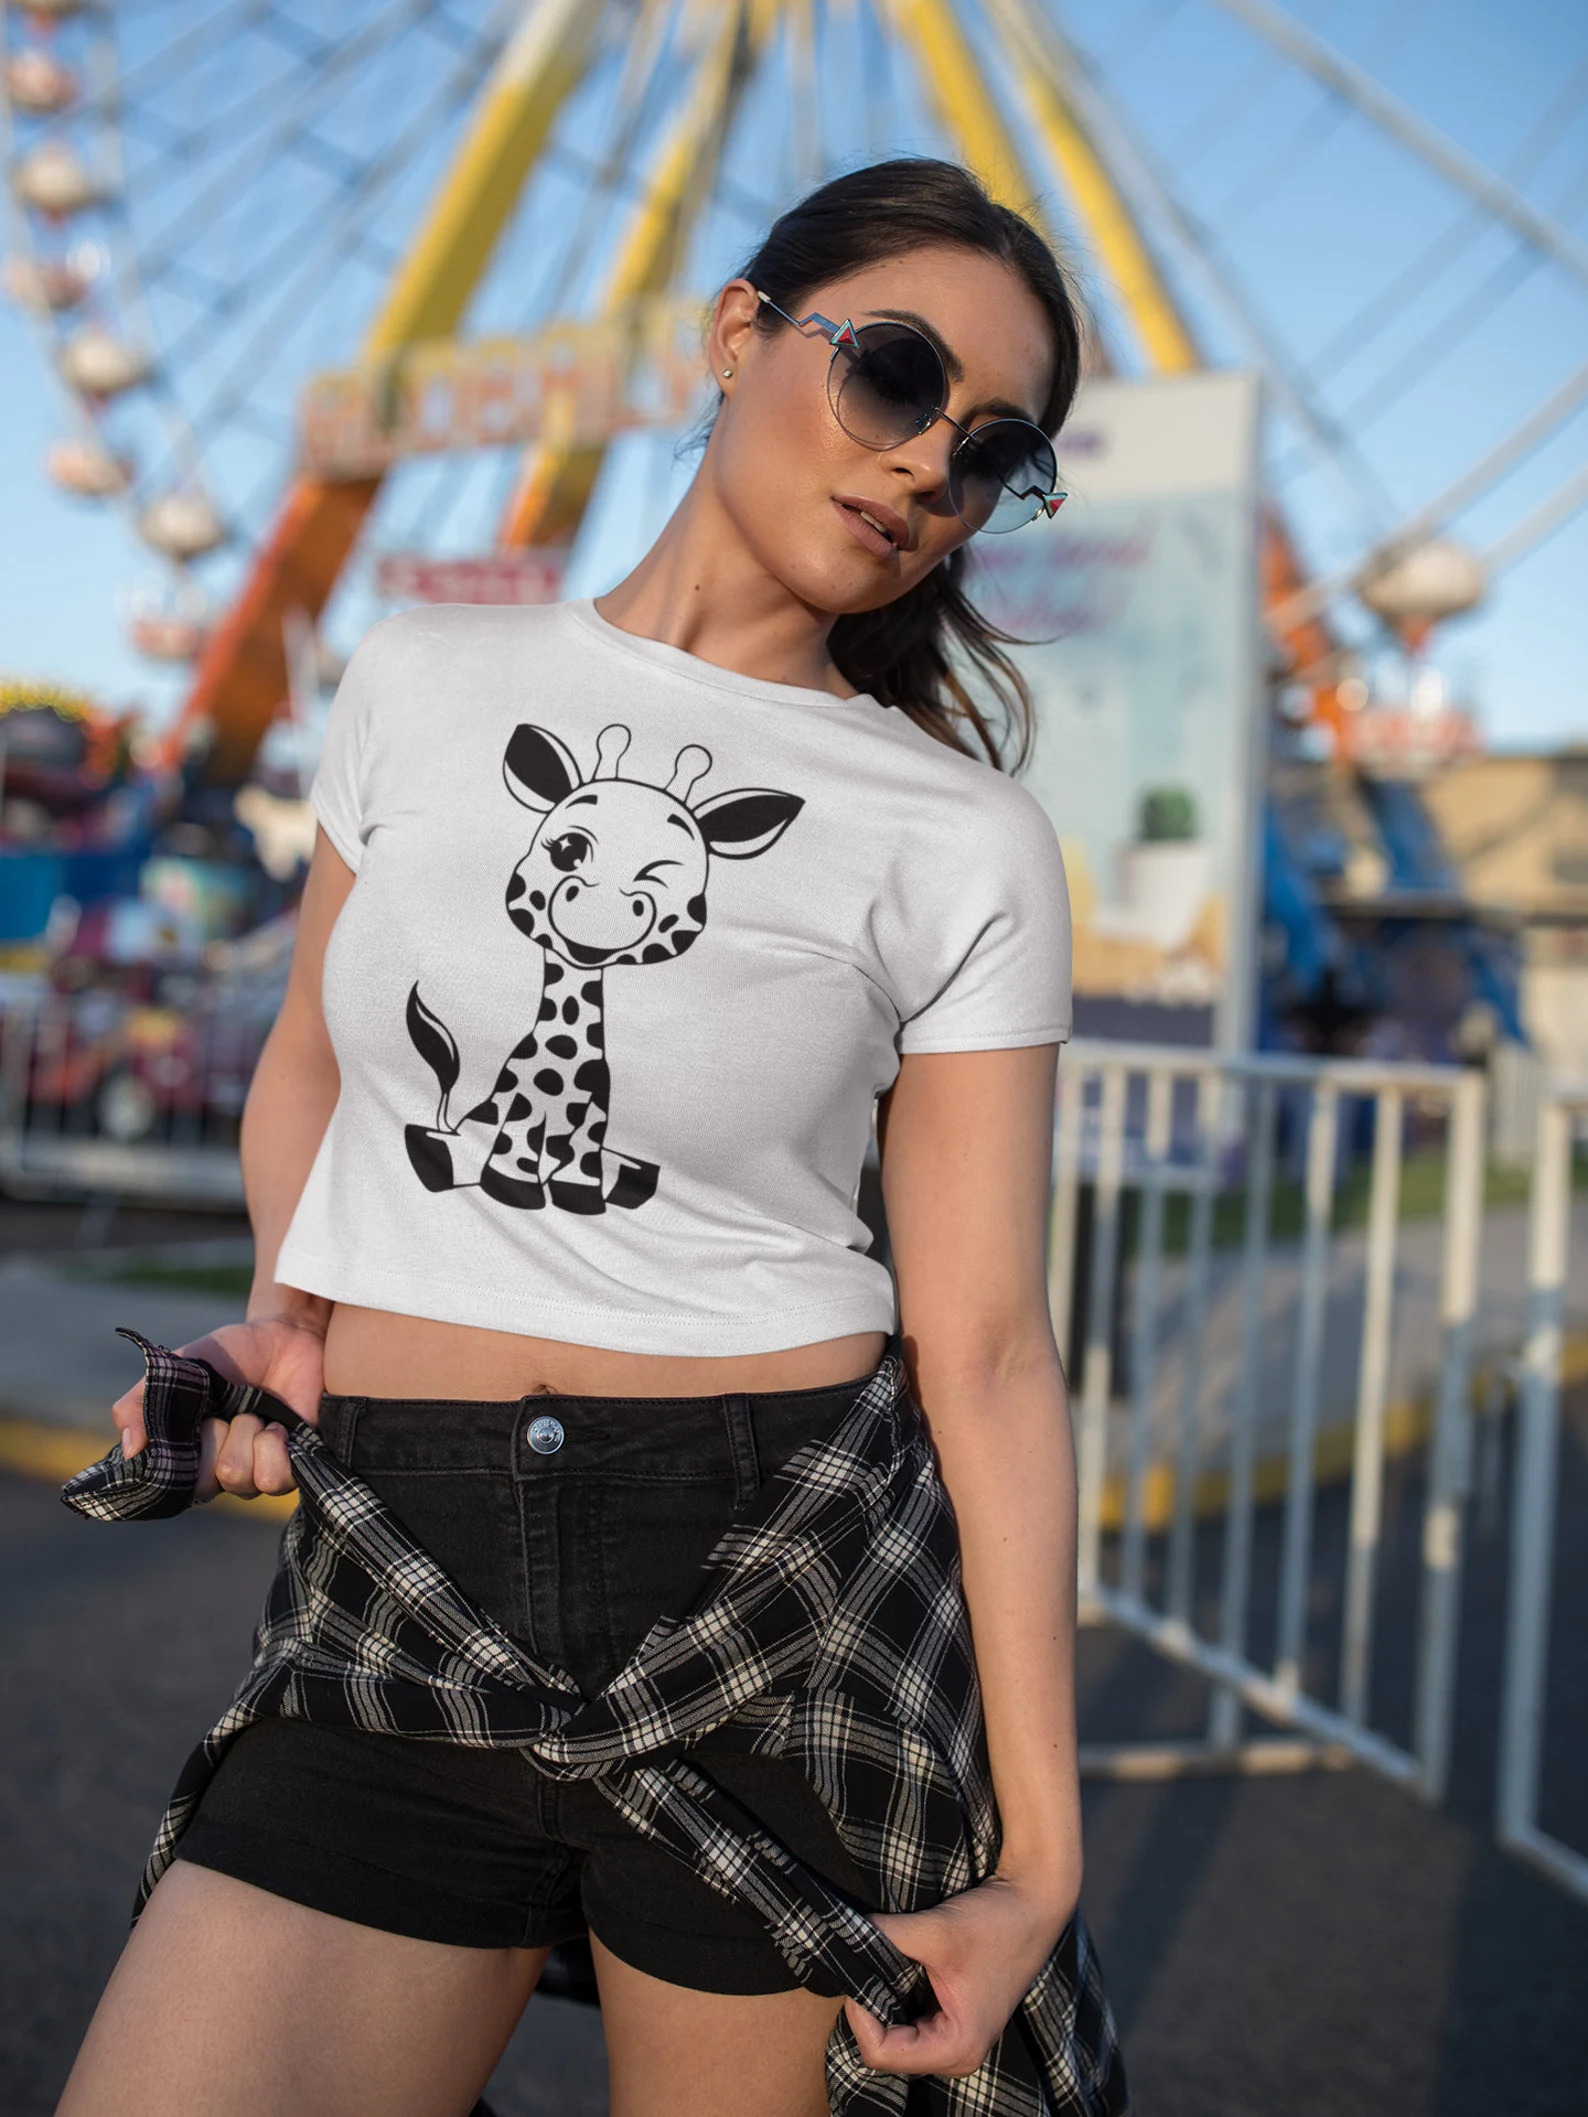 Woman wearing a shirt with a giraffe on it.